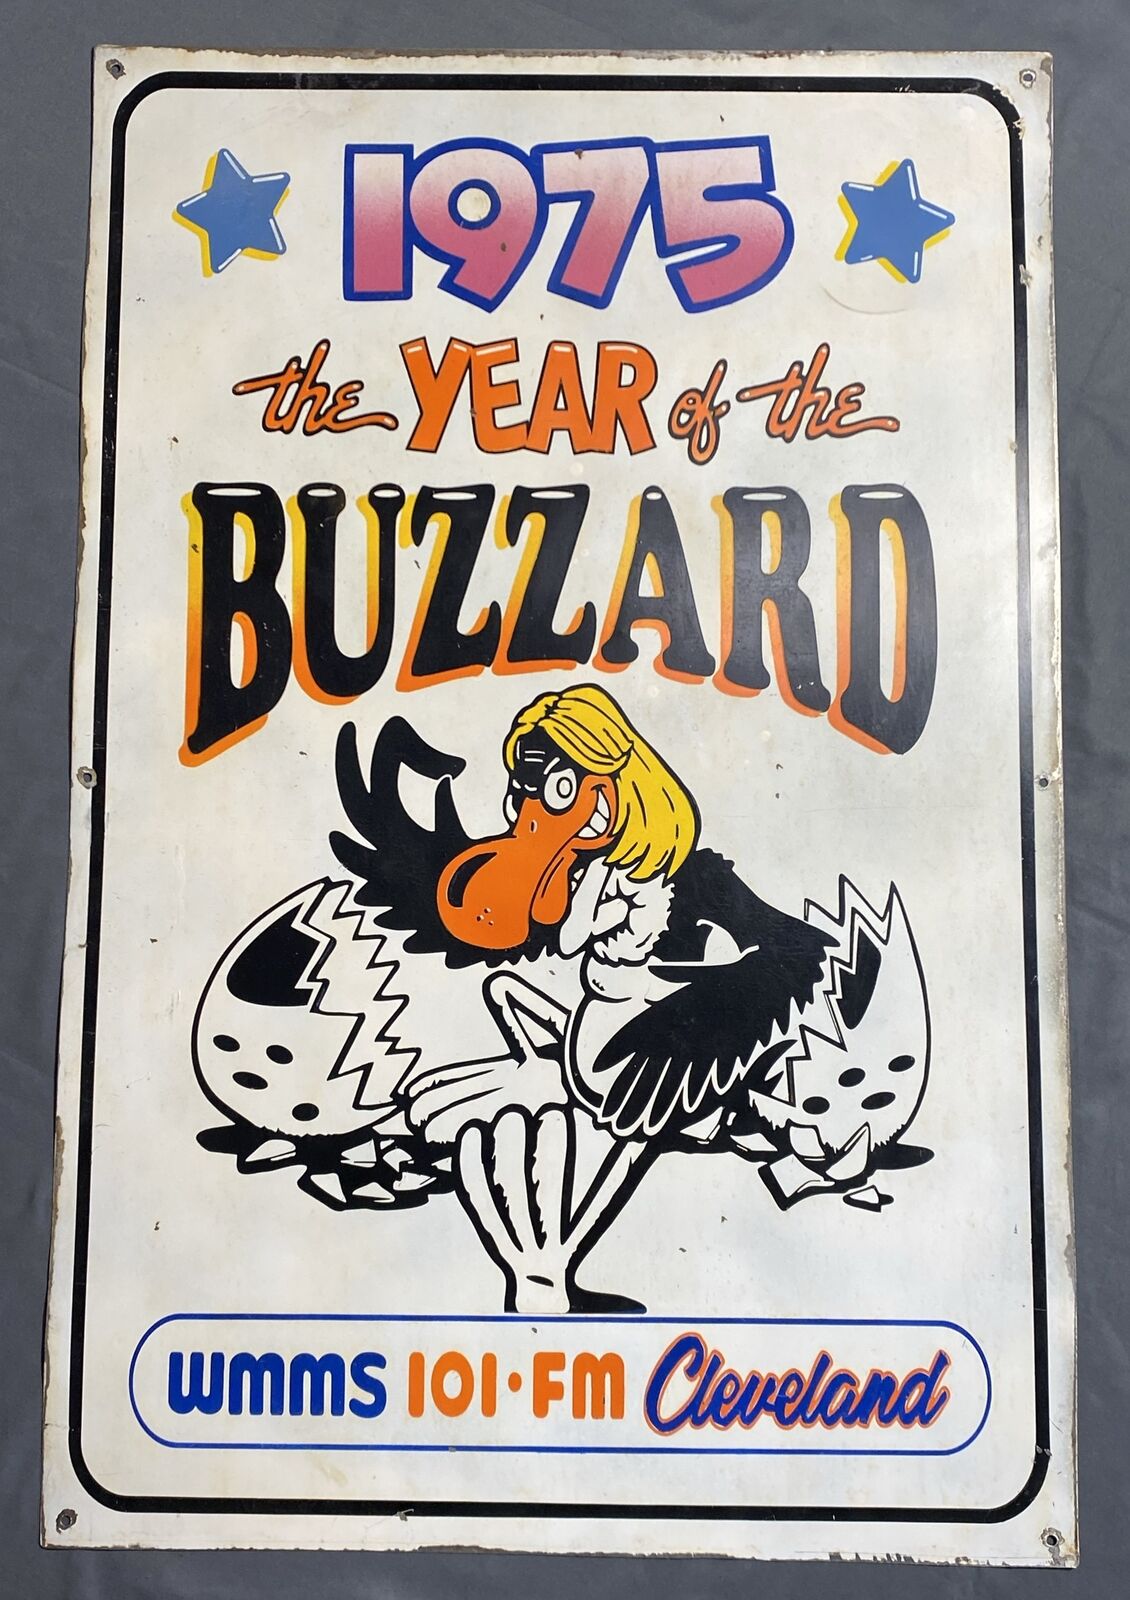 Vintage Original 1975 Buzzard WMMS 101 Cleveland ROCKS Radio Station Metal Sign